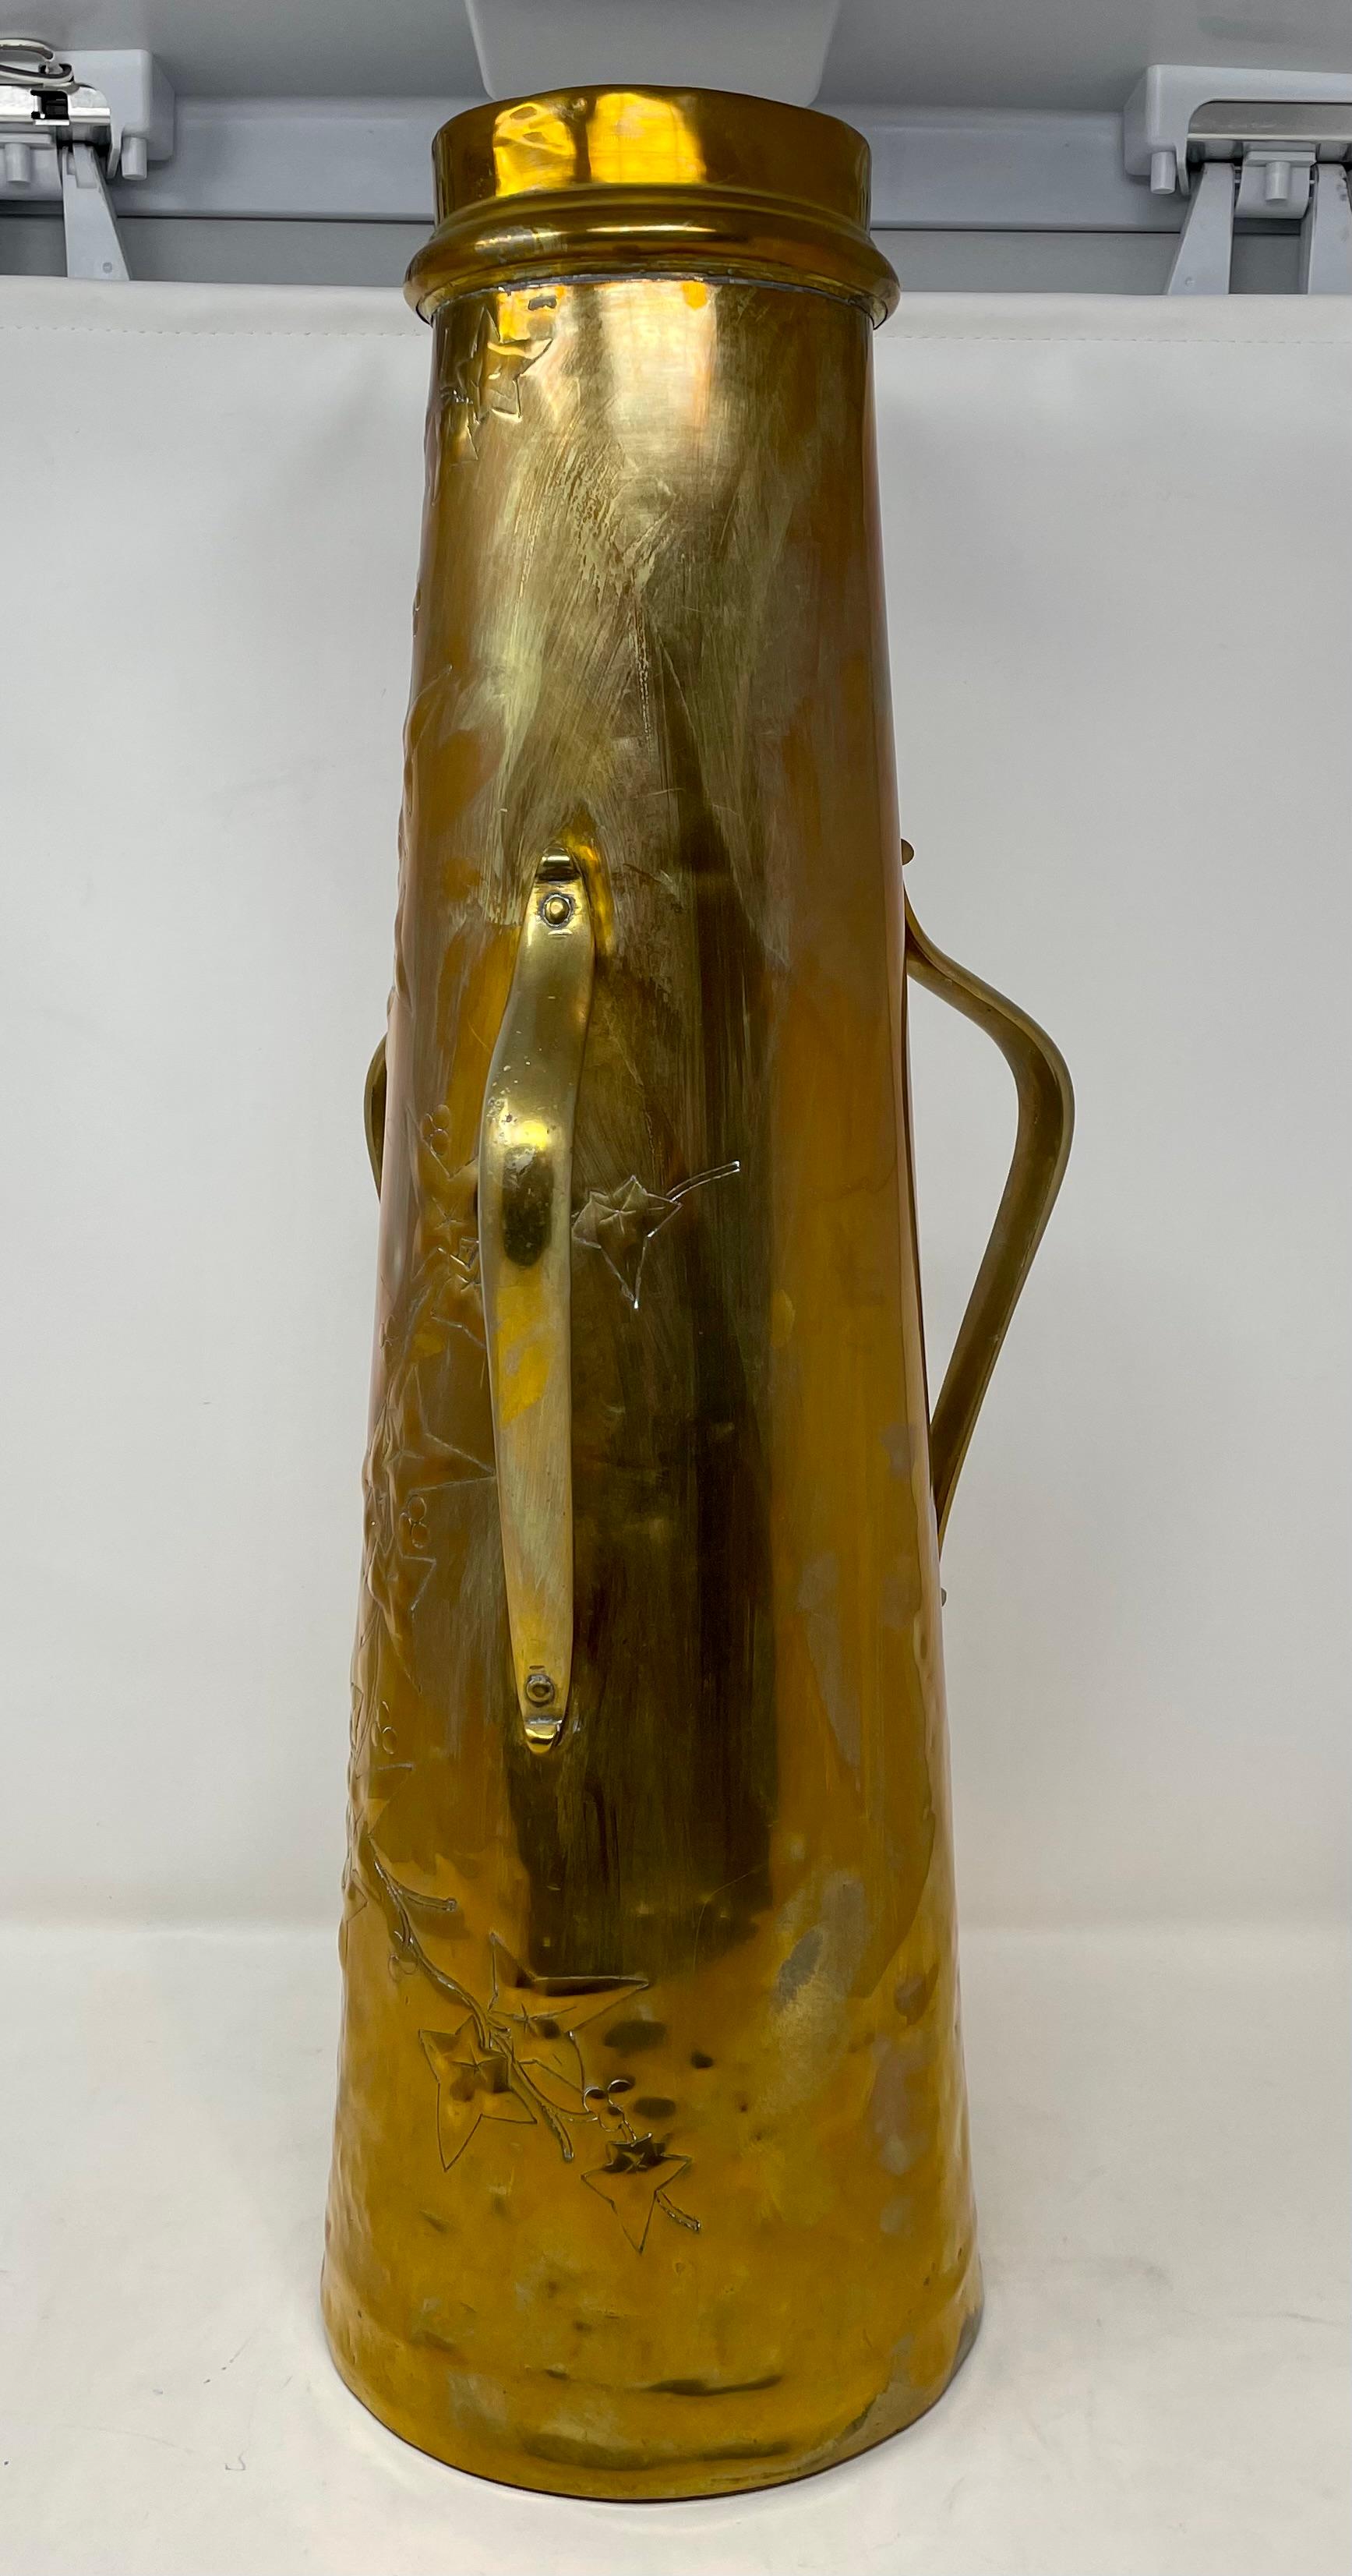 Antique English Victorian brass water can, circa 1880.